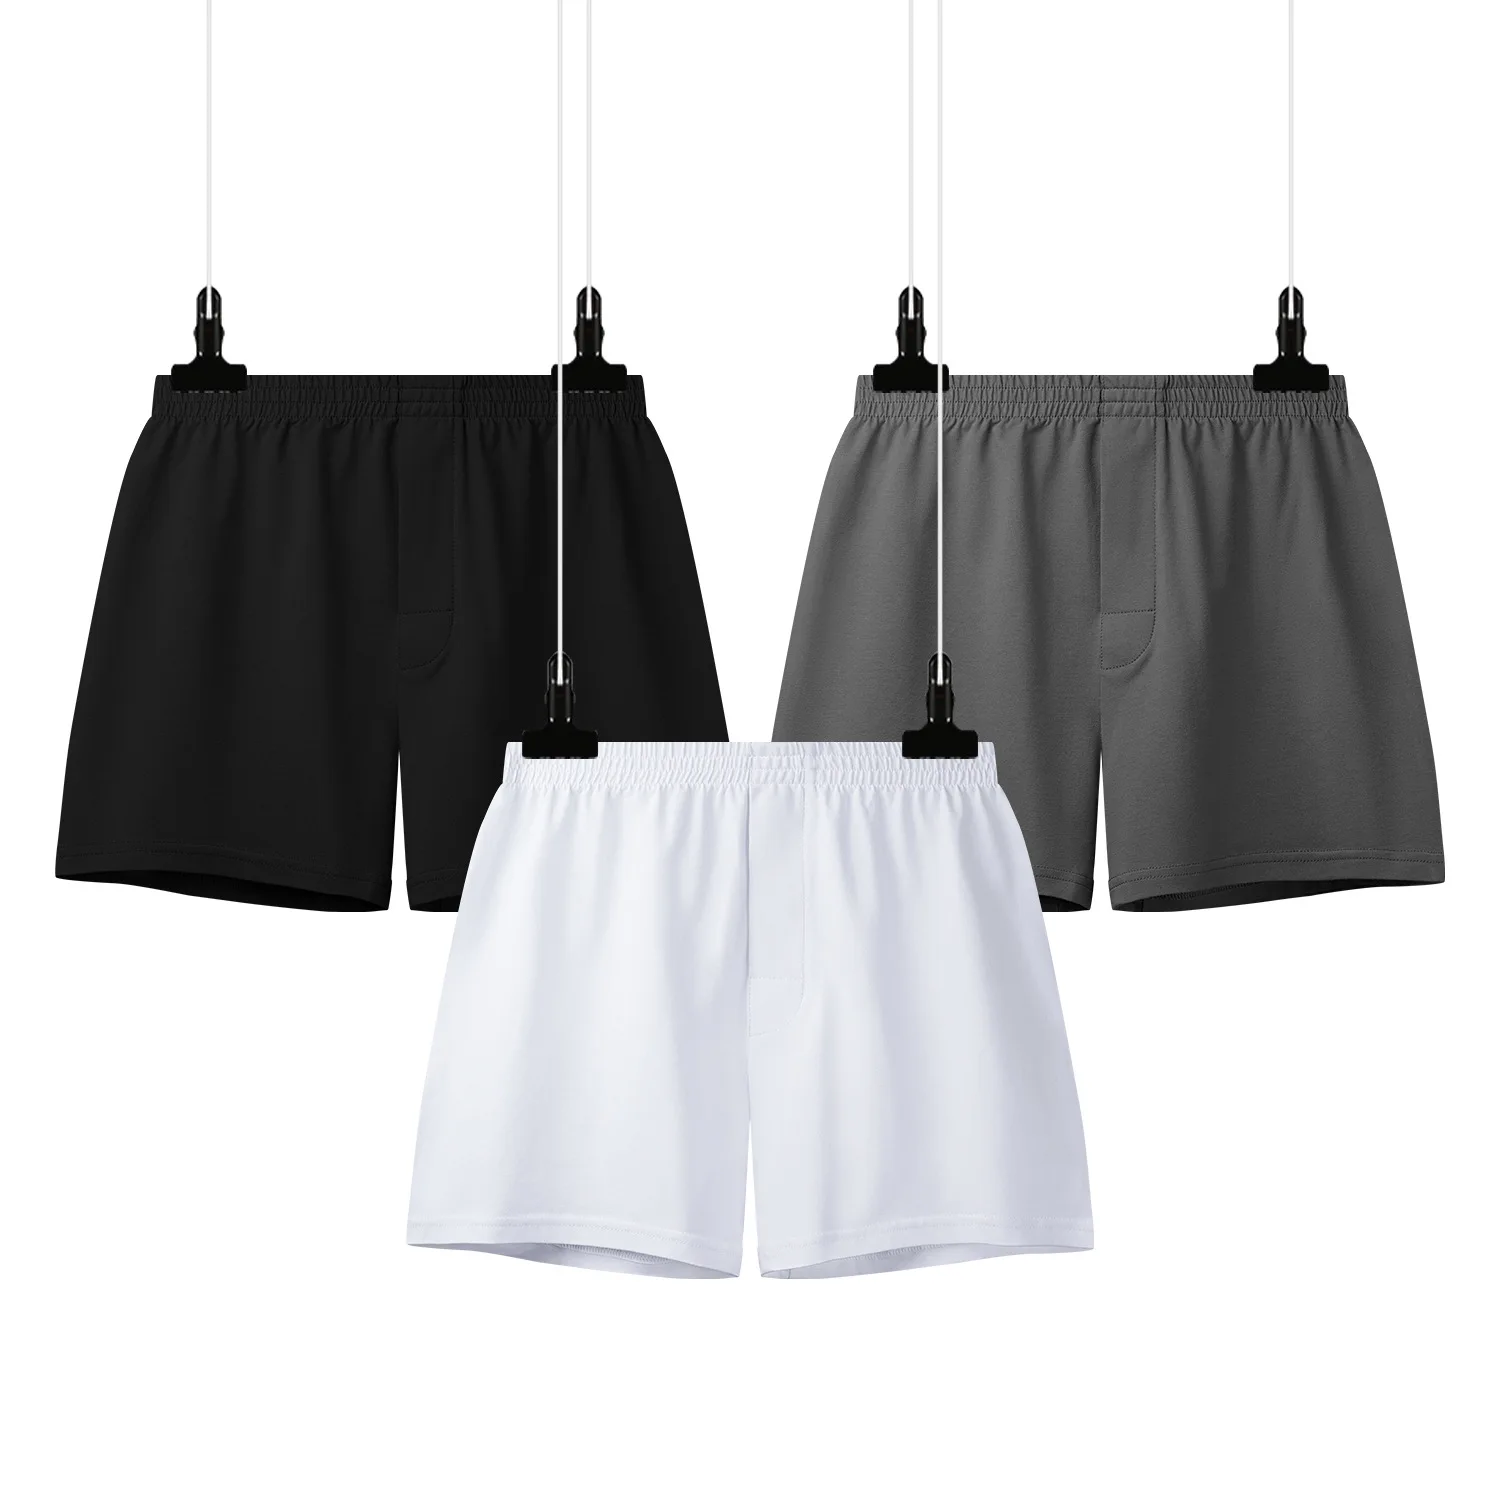 Men Solid Breathable Underwear Cotton Sleepwear Mens Arrow Panties Comfortable Short Pants Male Boxer Shorts Underpants Homewear